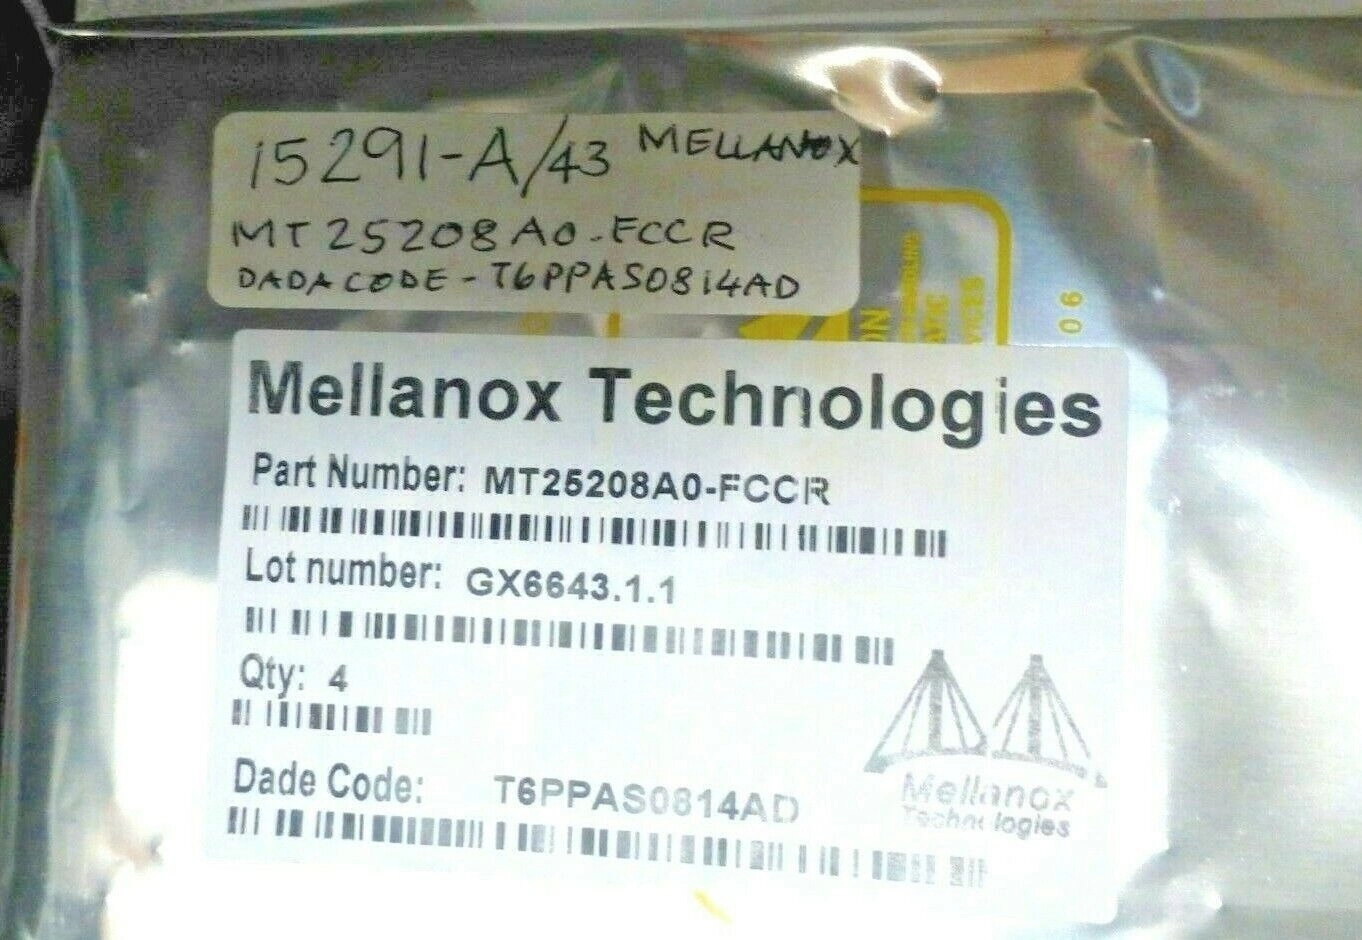 MELLANOX TECHNOLOGIES .MT25208A0-FCCR; DADA CODE T